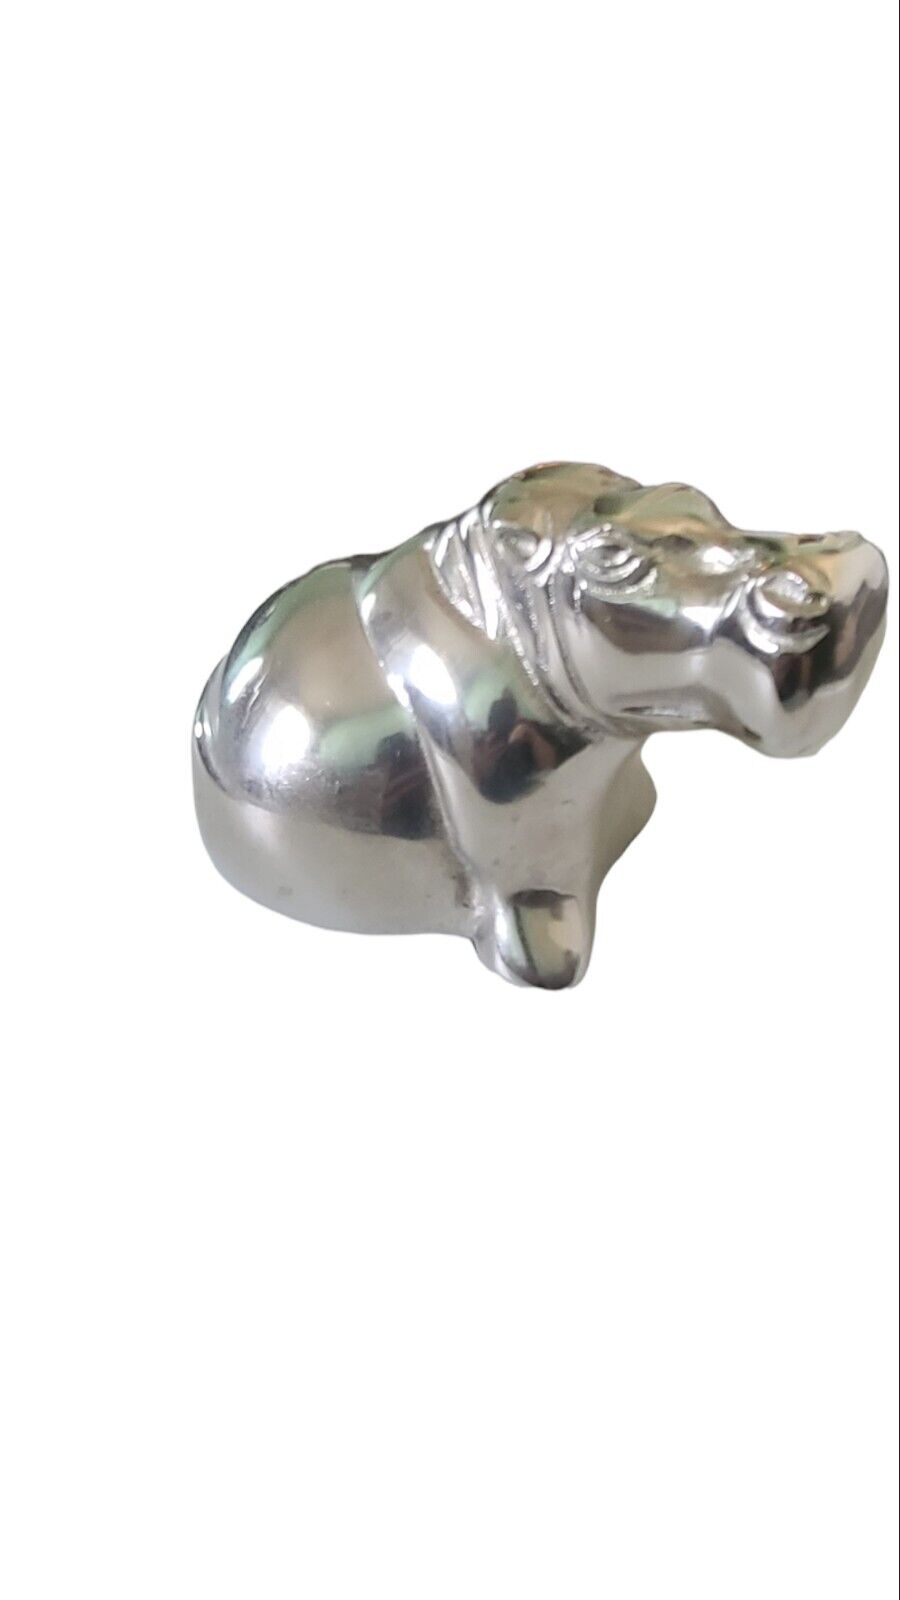 Metal Hippos Hippopotamus Sculpture Figurine Home Decor Table Top Paperweight